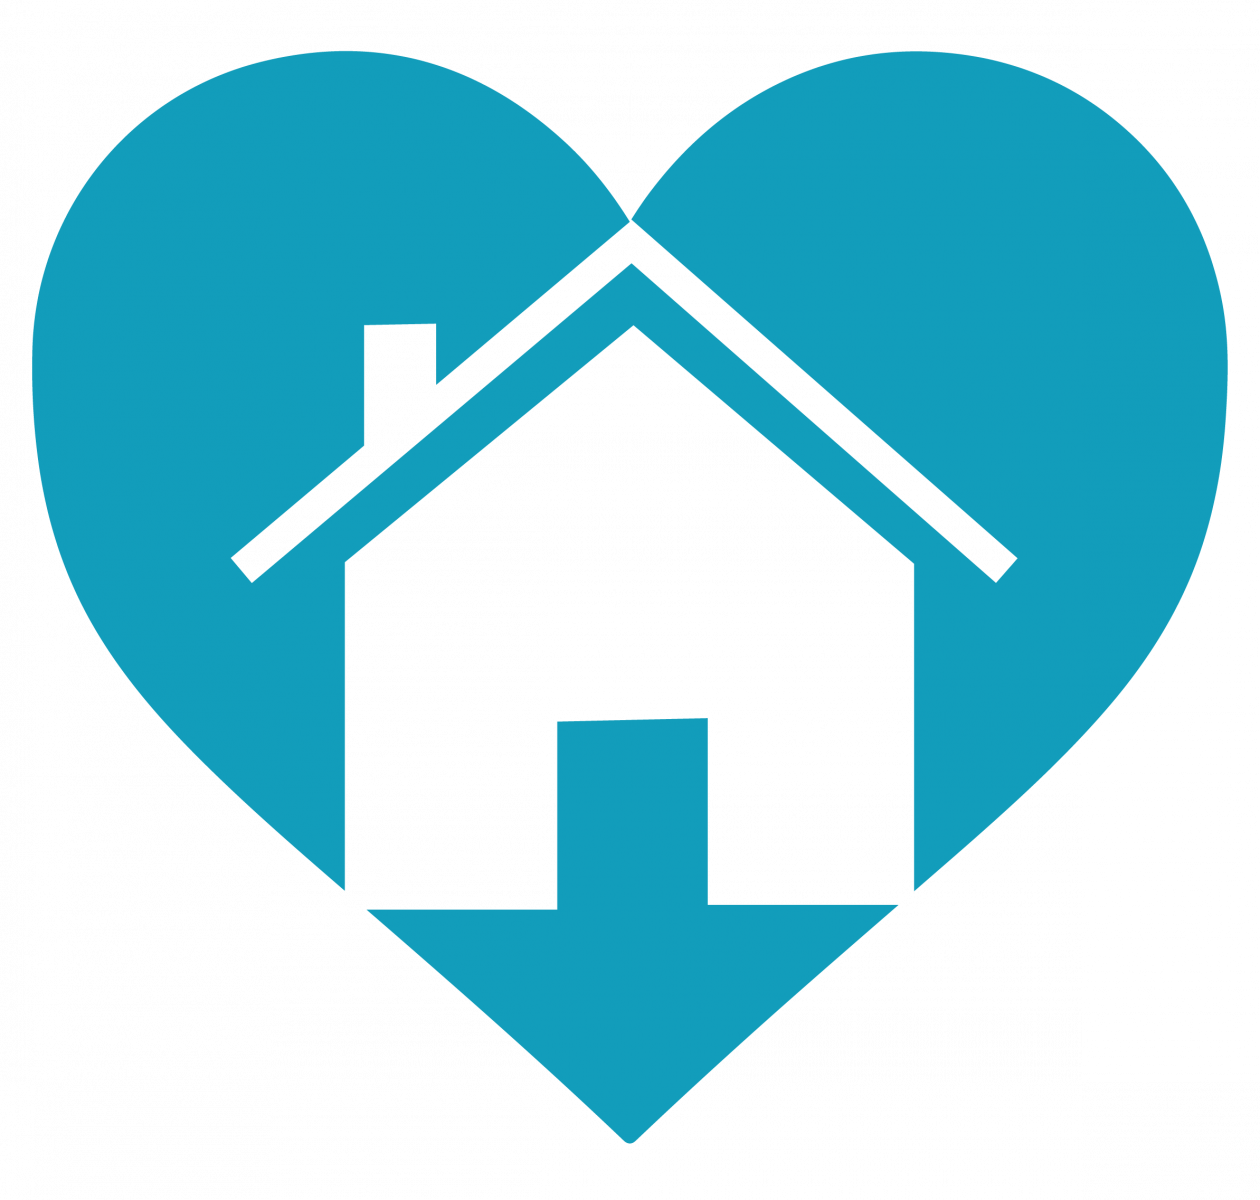 A cartoon house inside a blue love heart